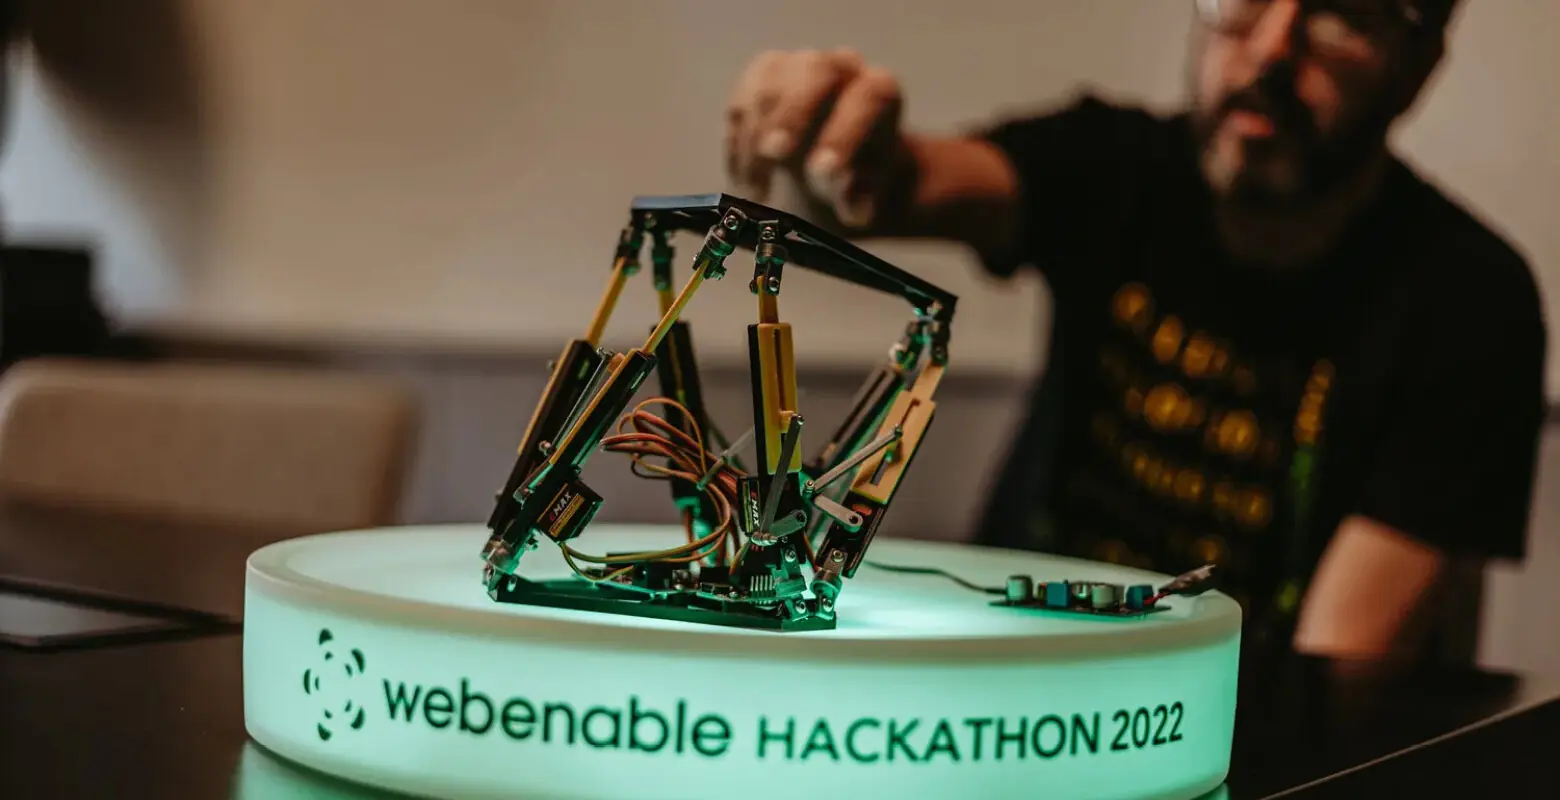 Webenable hackathon 2022